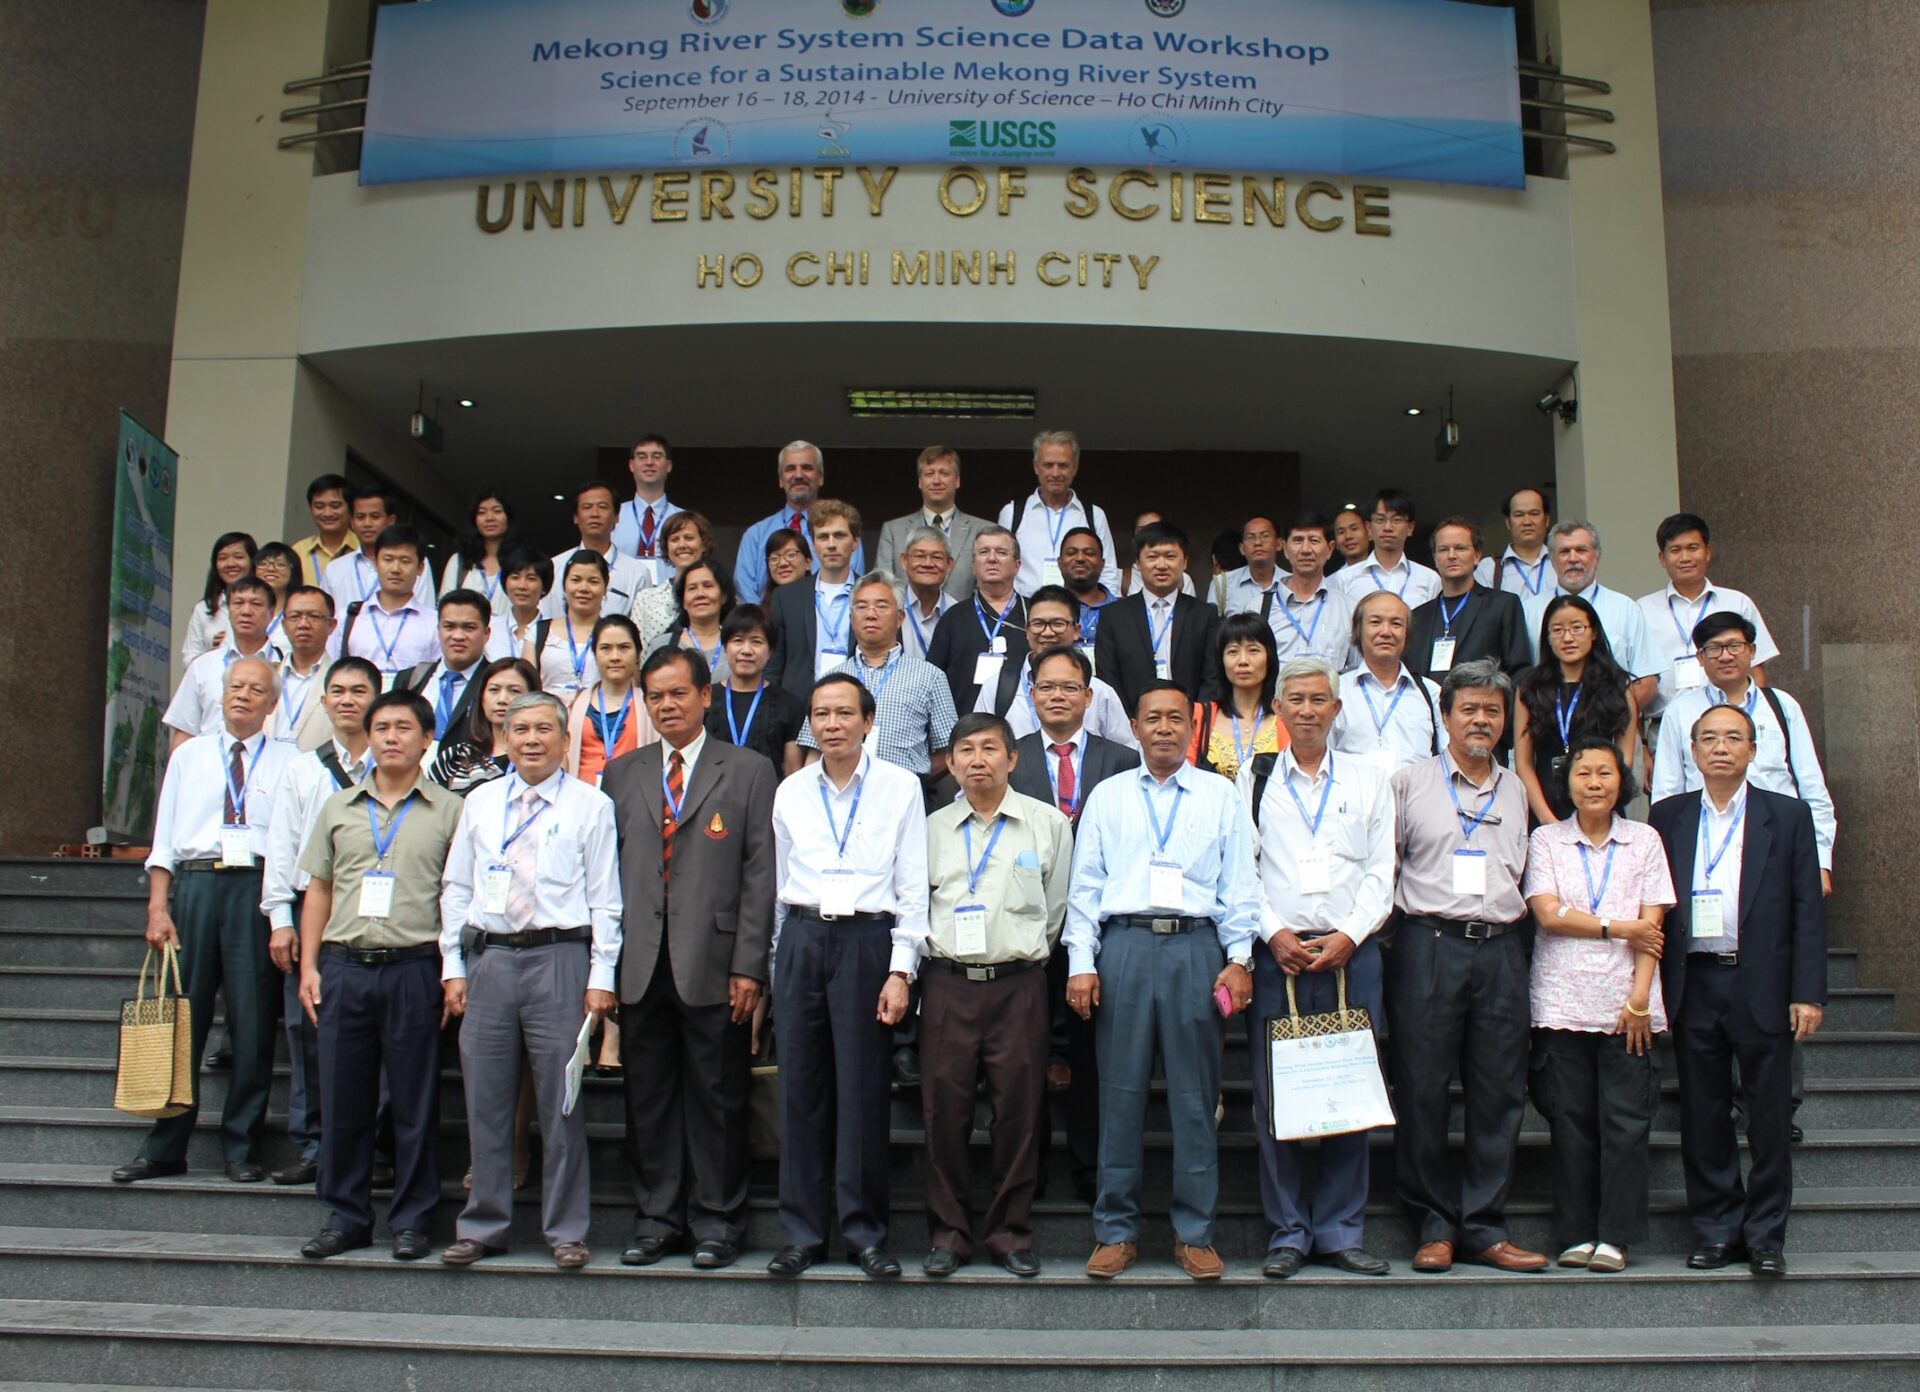 Mekong Science Data Workshop Group Photo